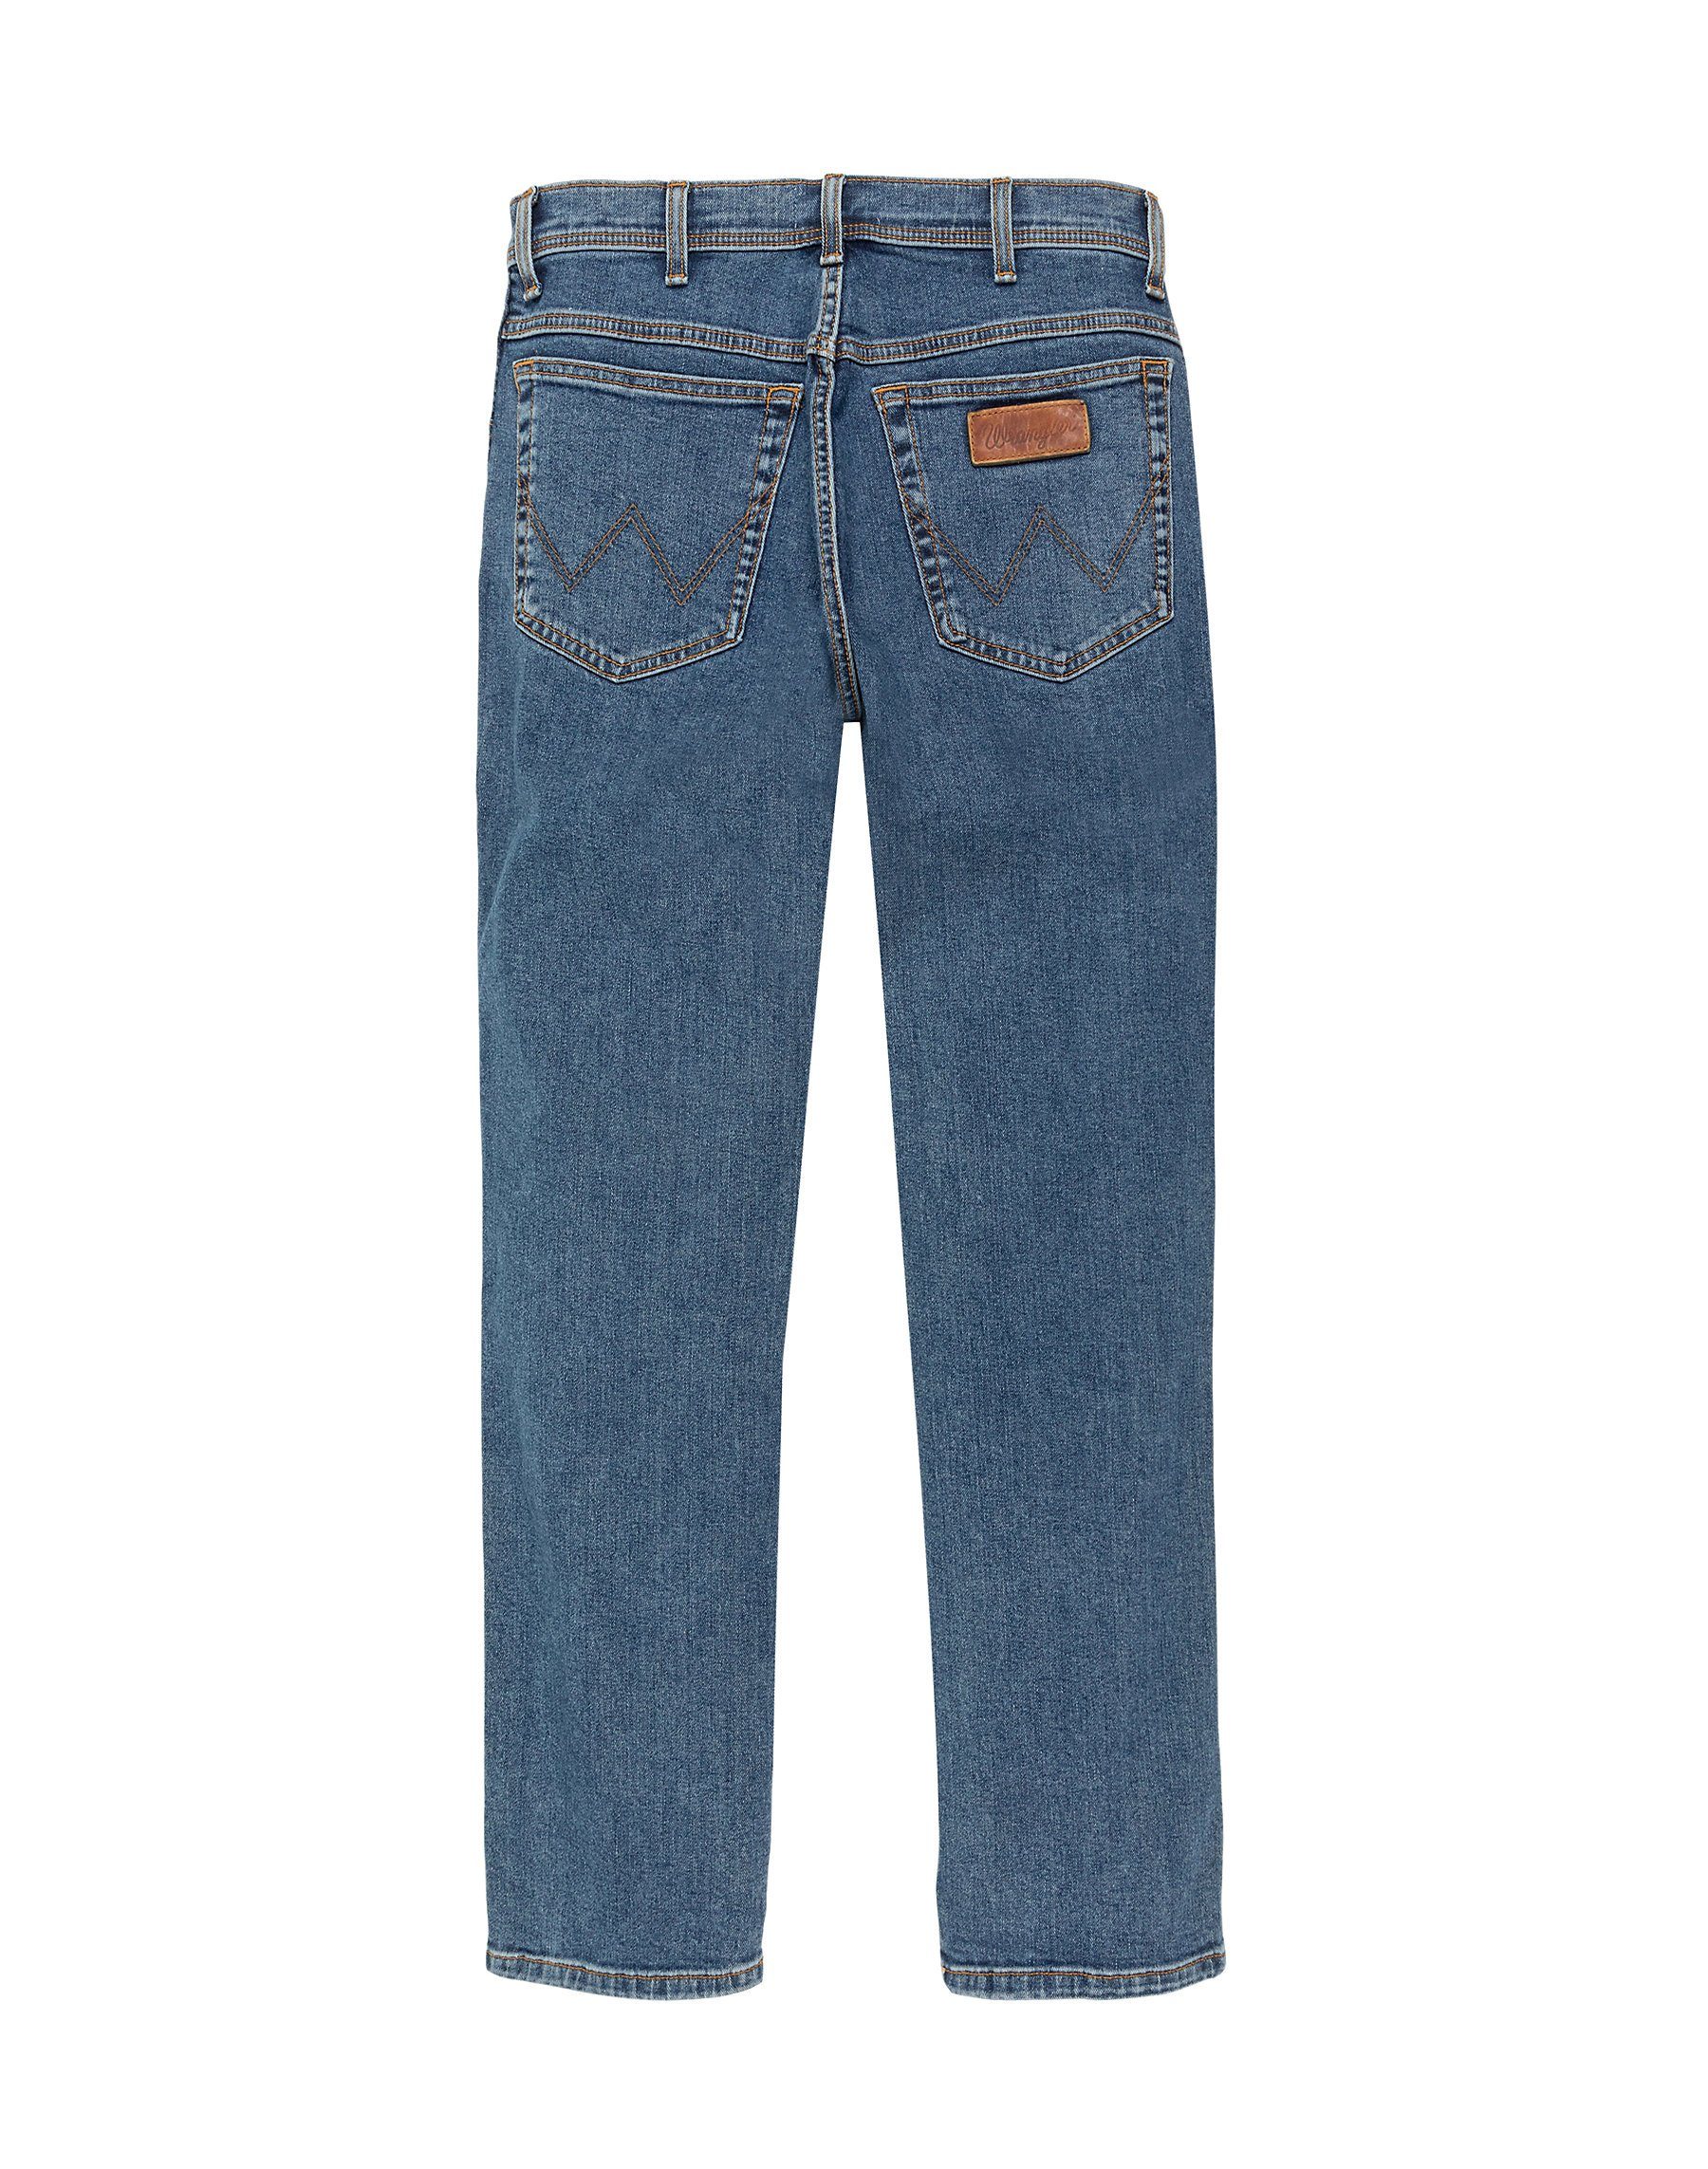 Wrangler WRANGLER W12S33010 TEXAS SLIM blue 5-Pocket-Jeans stonewash vintage